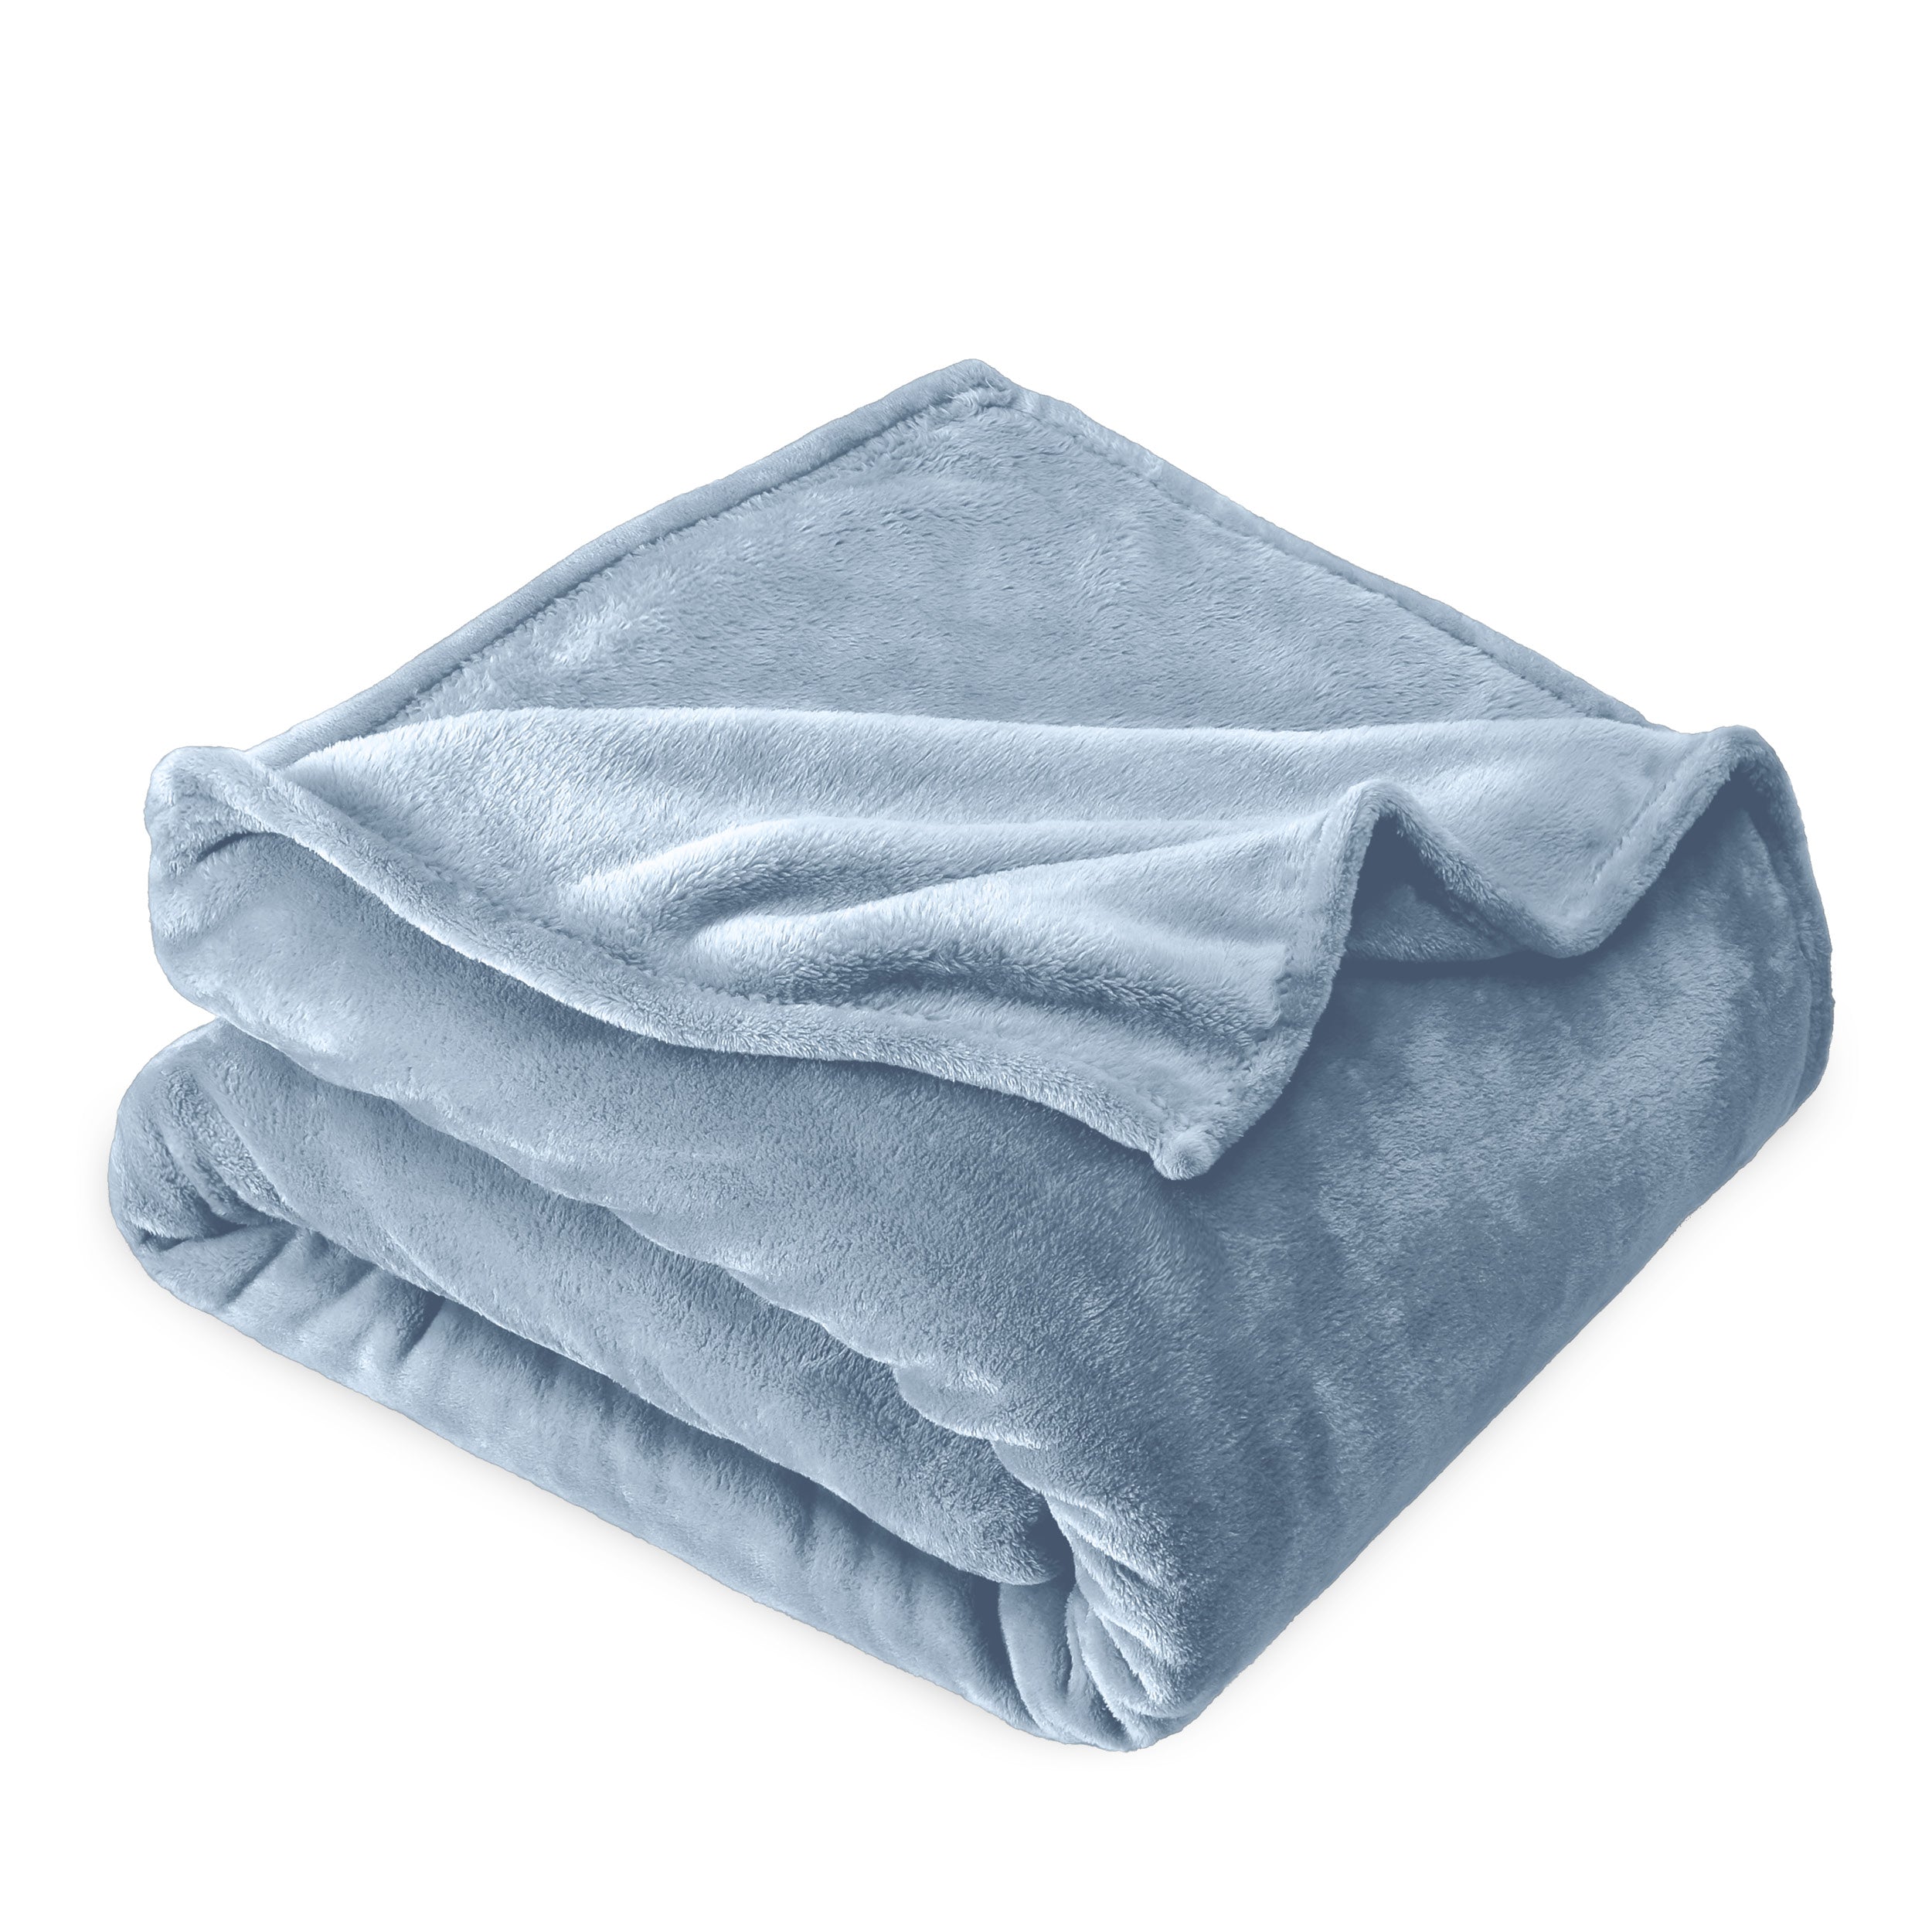 Microplush blanket folded neatly